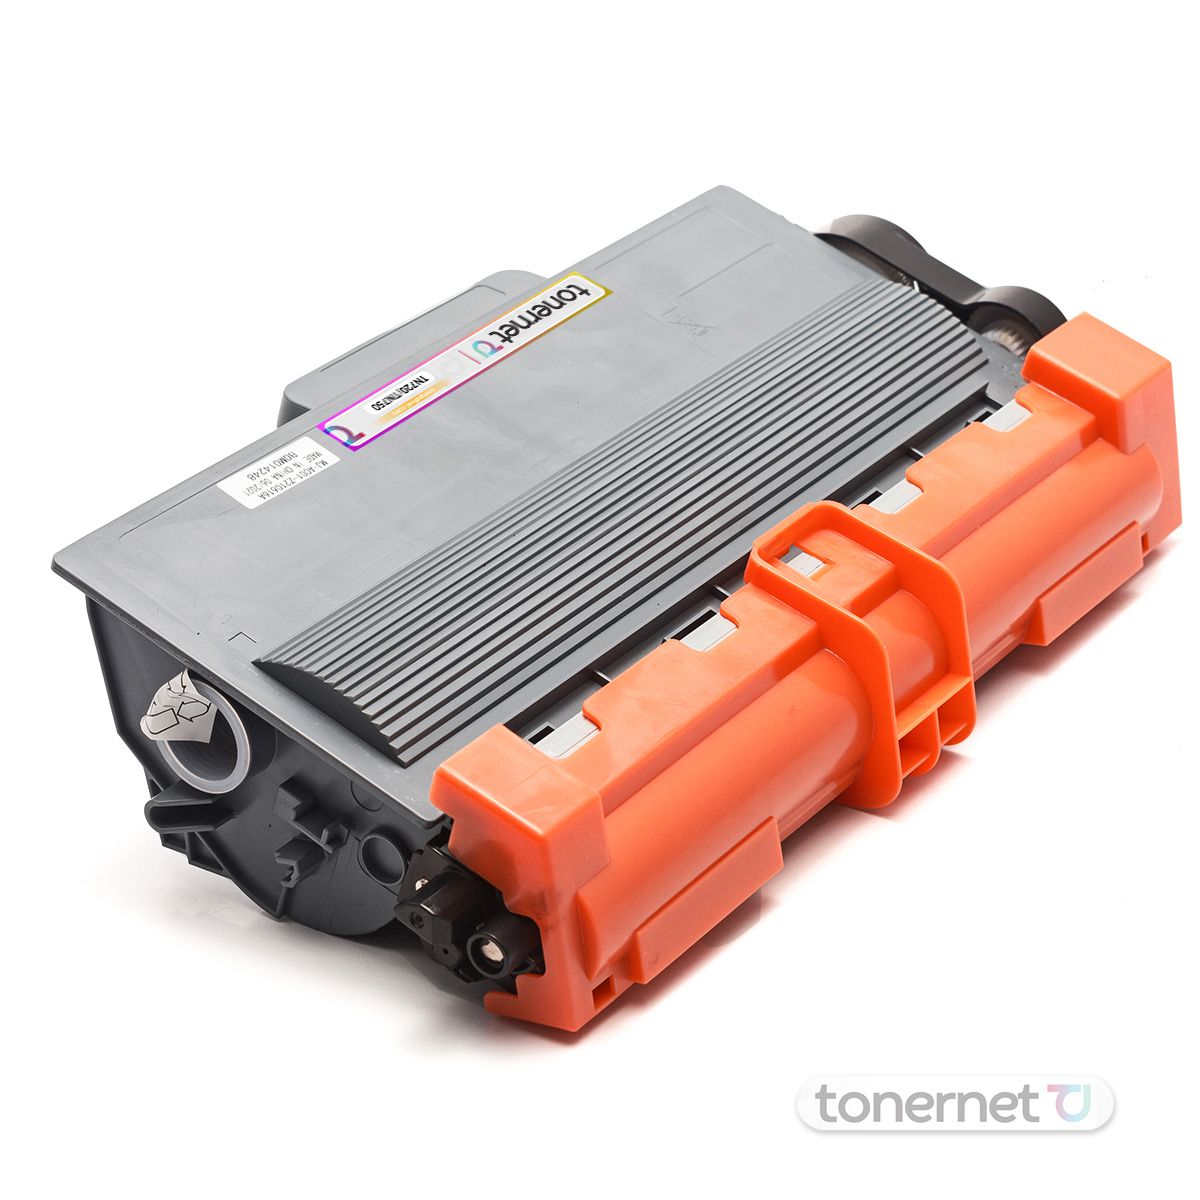 Cartucho Toner Tn750 Tn3382 Compatível Brother | Tonernet - Cartuchos,  Toners e Tintas para Impressão | Tonernet